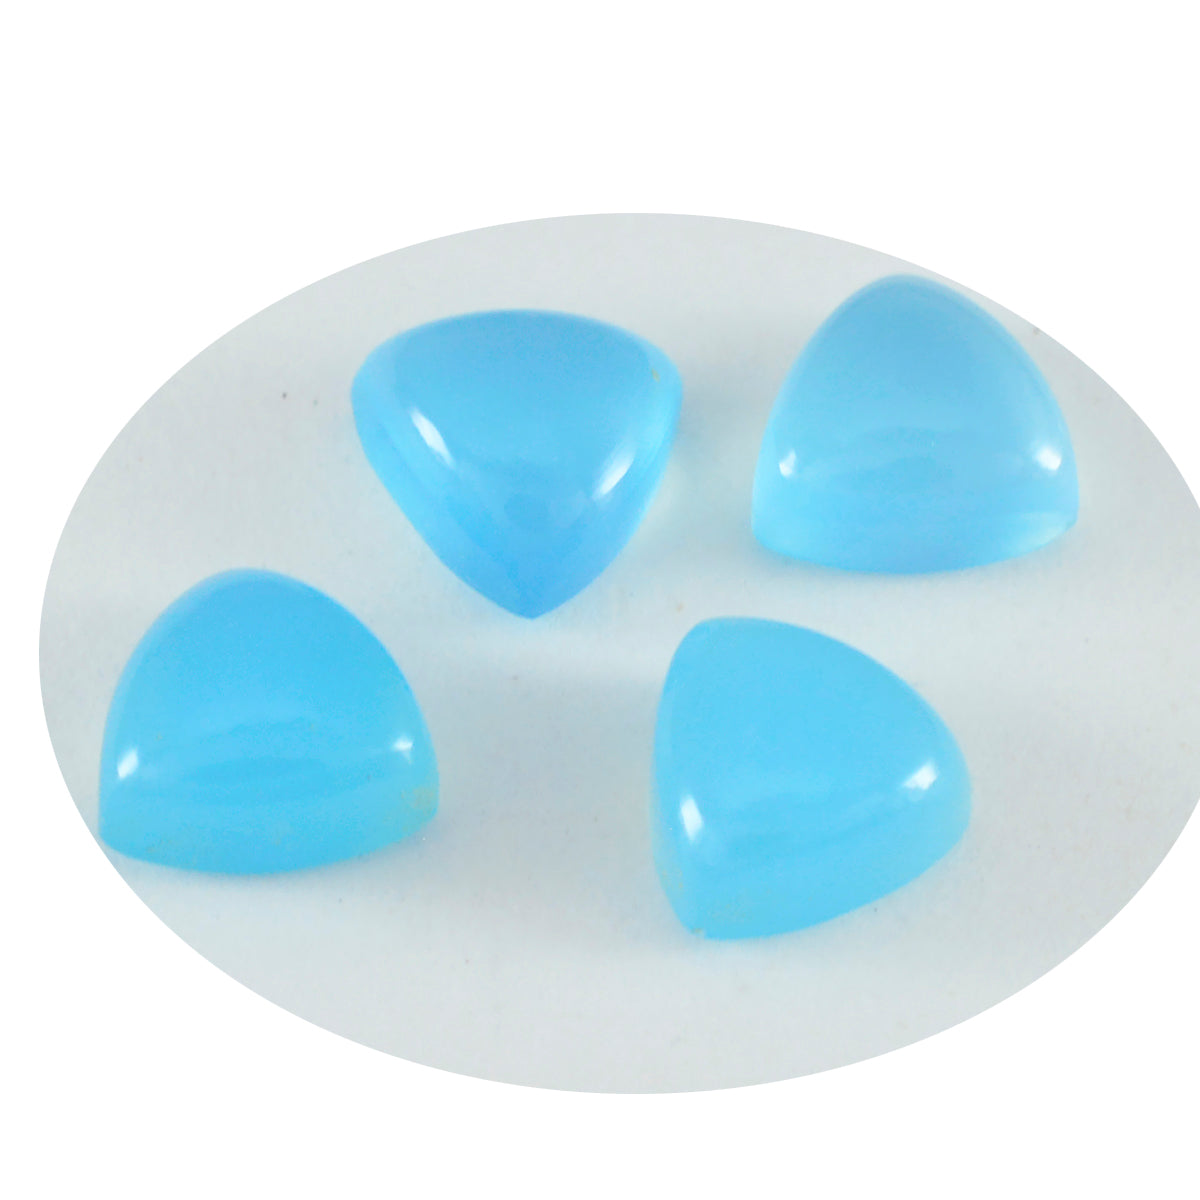 Riyogems 1PC Blue Chalcedony Cabochon 7x7 mm Trillion Shape beauty Quality Loose Gems